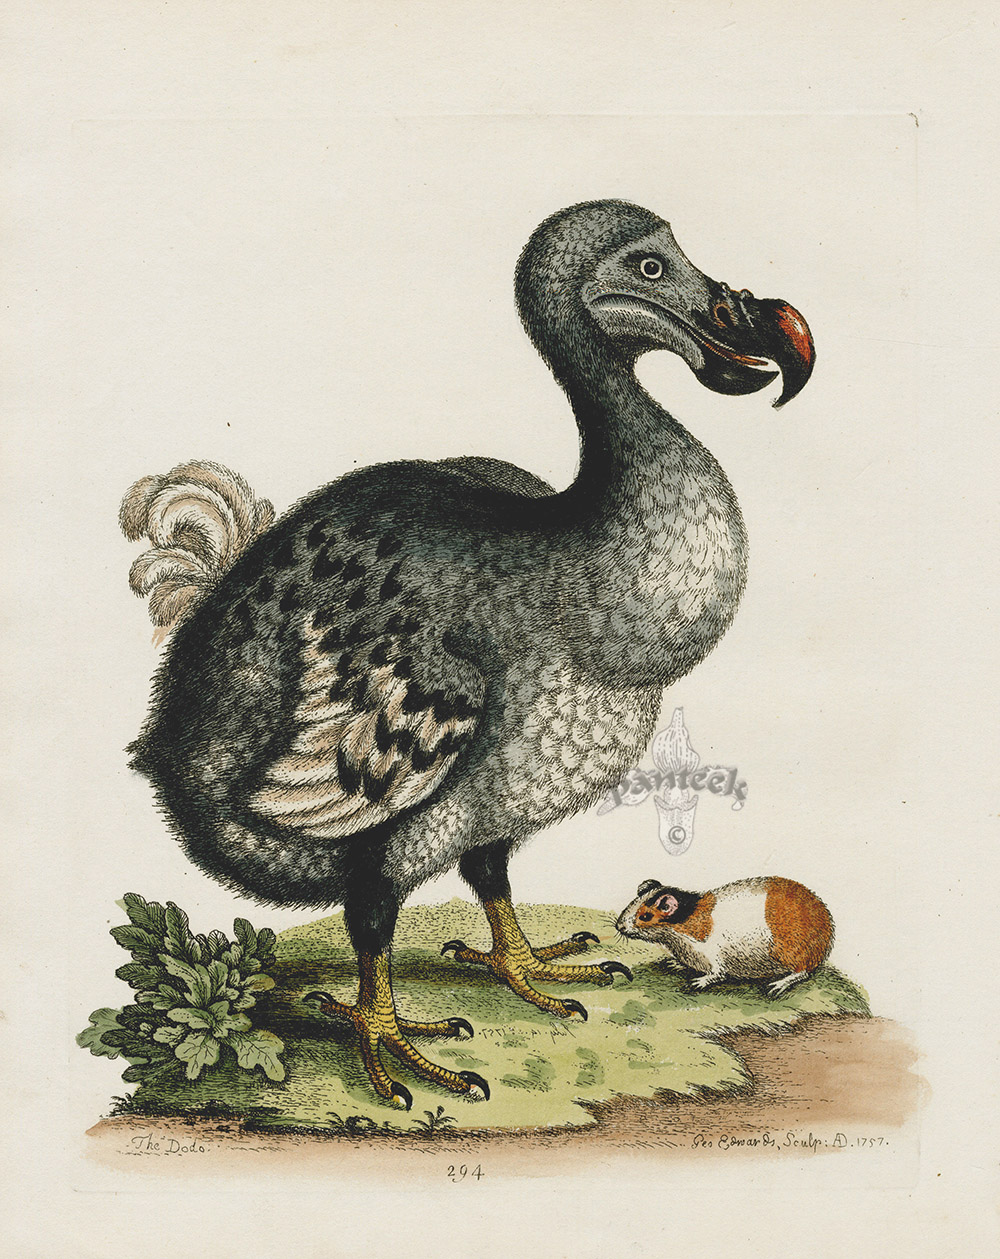 The Dodo EXTINCT from George Edwards Antique Bird Prints 1743